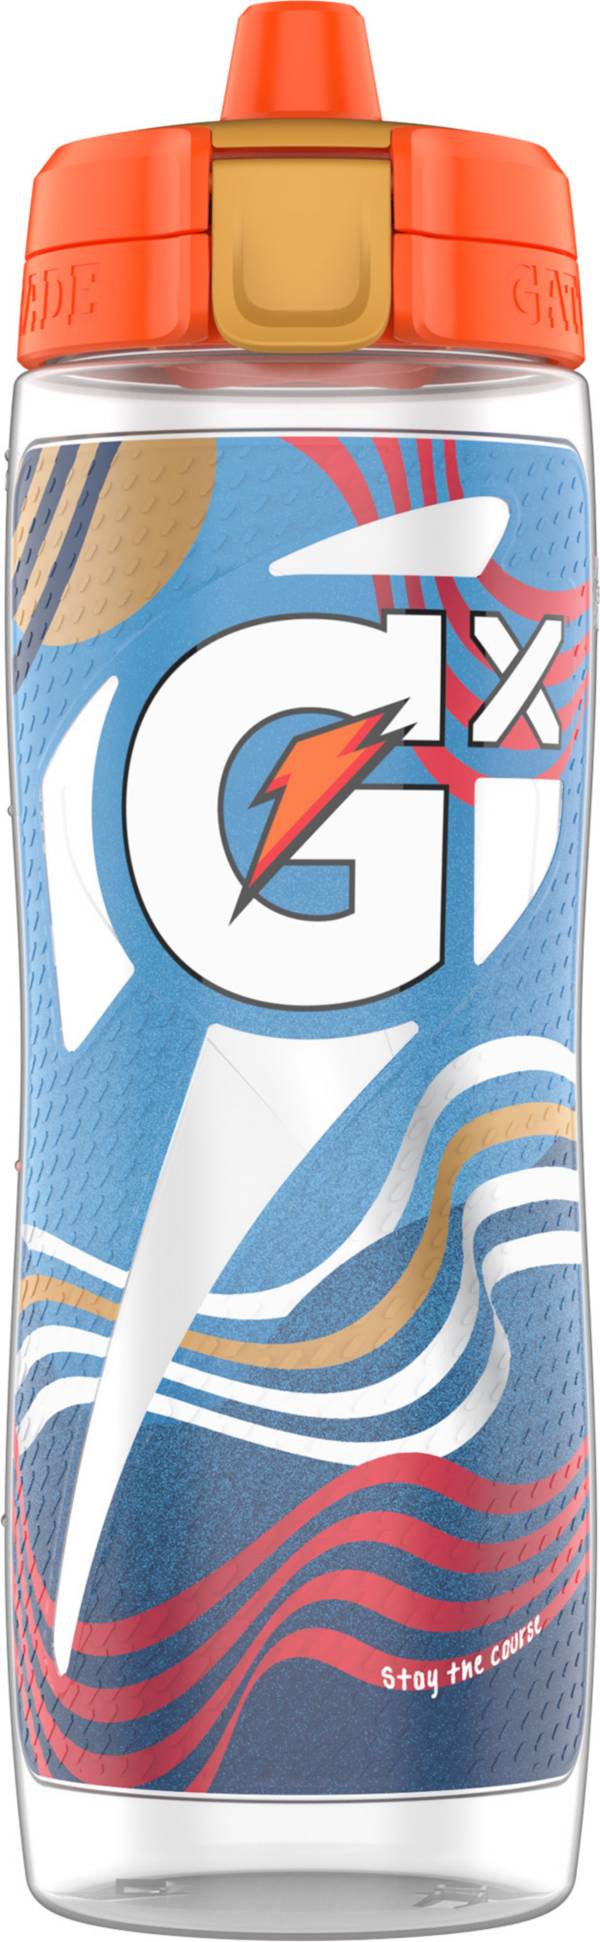 Gatorade Gx Mallory Swanson 30 oz. Fuel Tomorrow Bottle